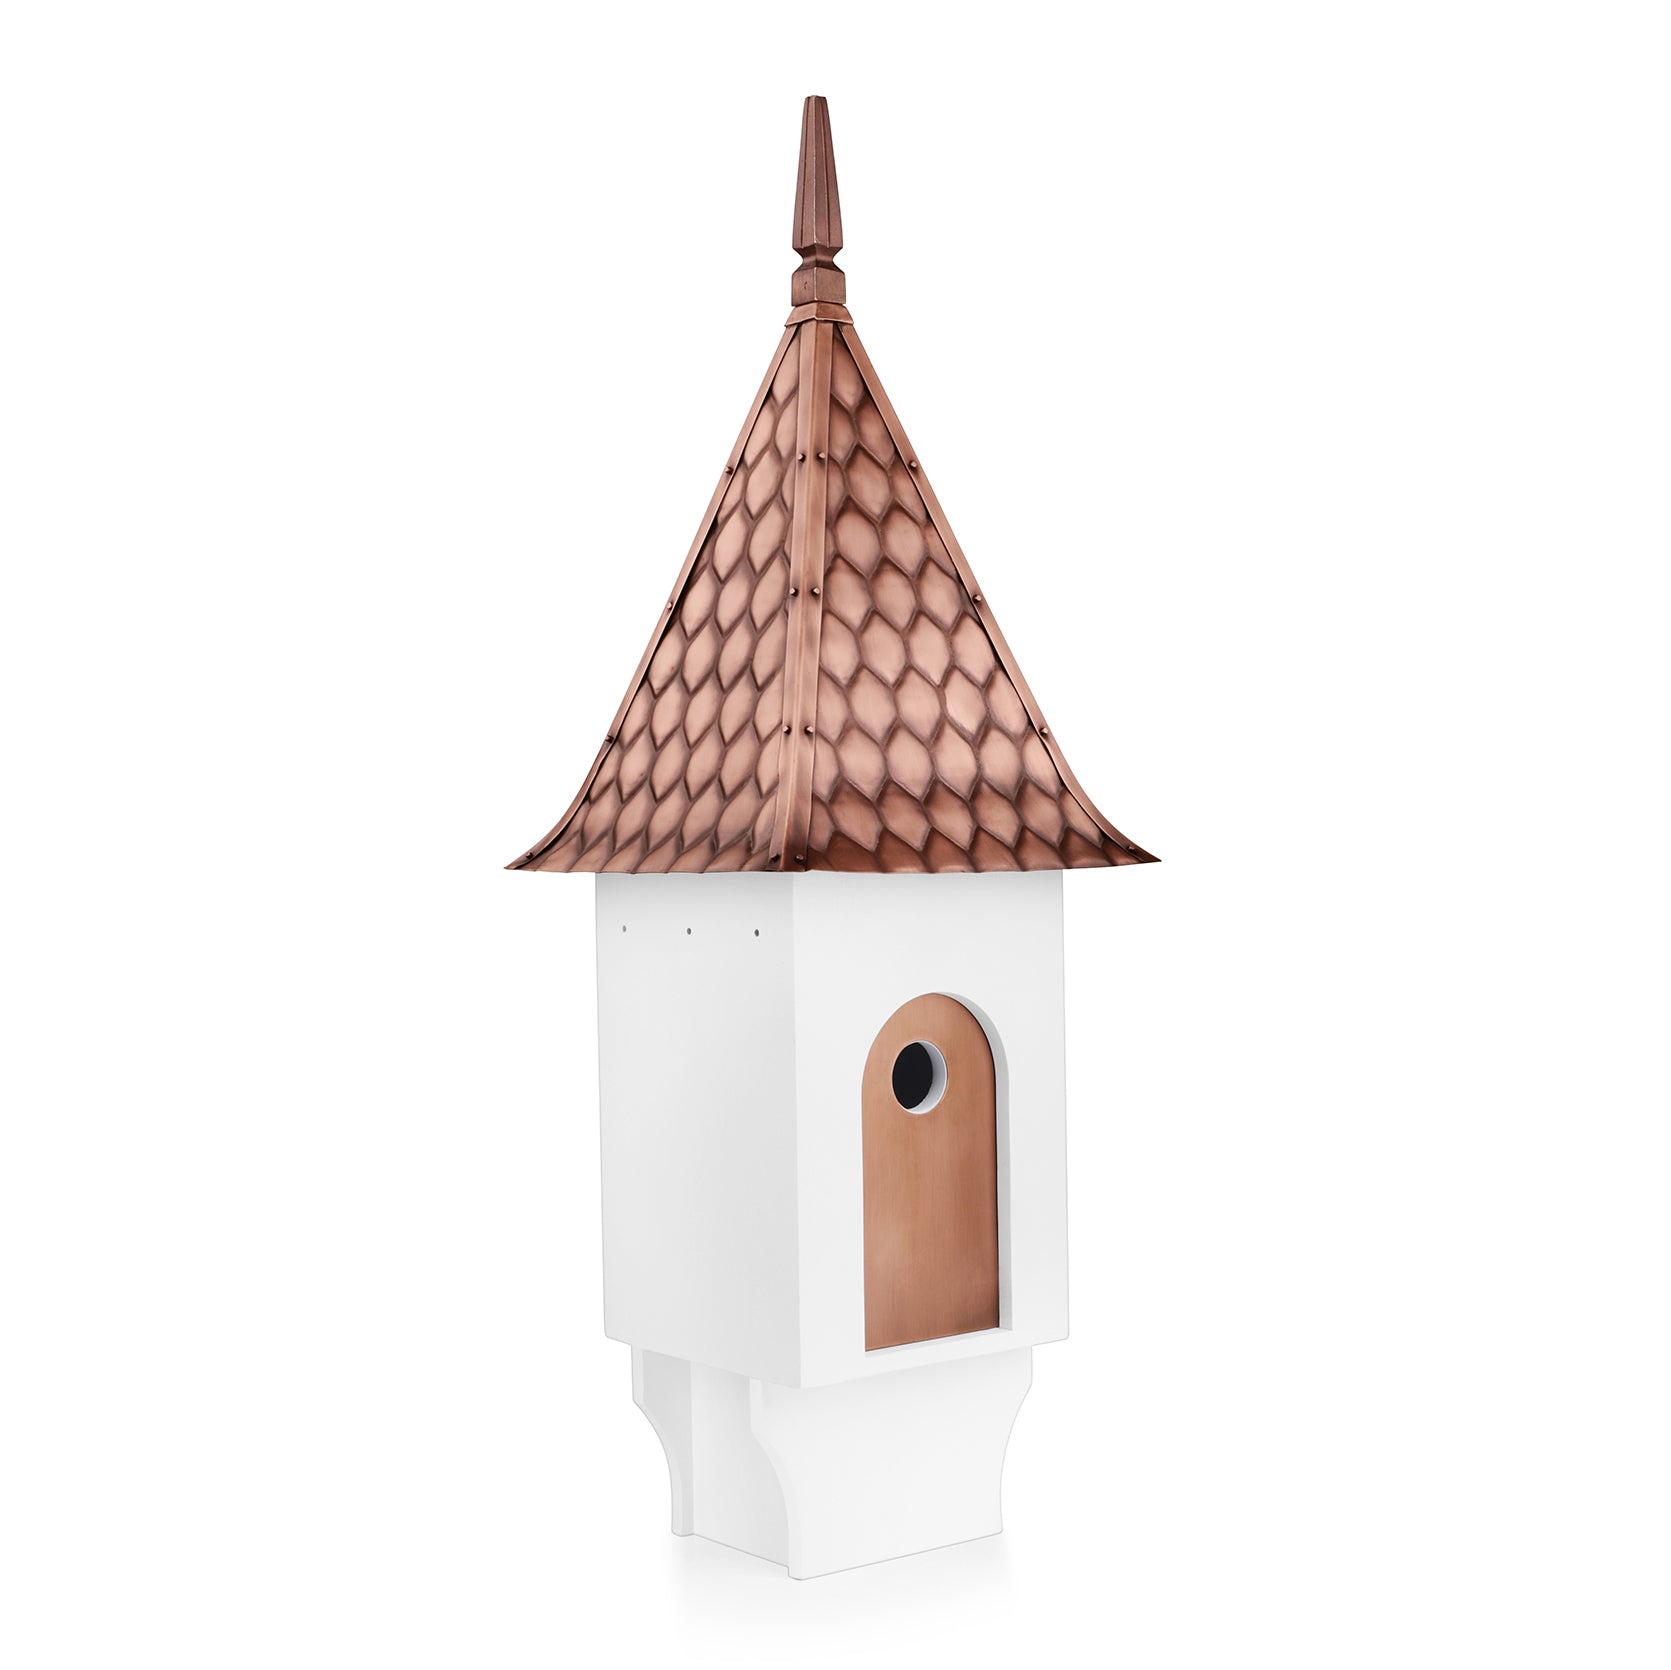 Chateau Bird House – Diamond Pattern Roof